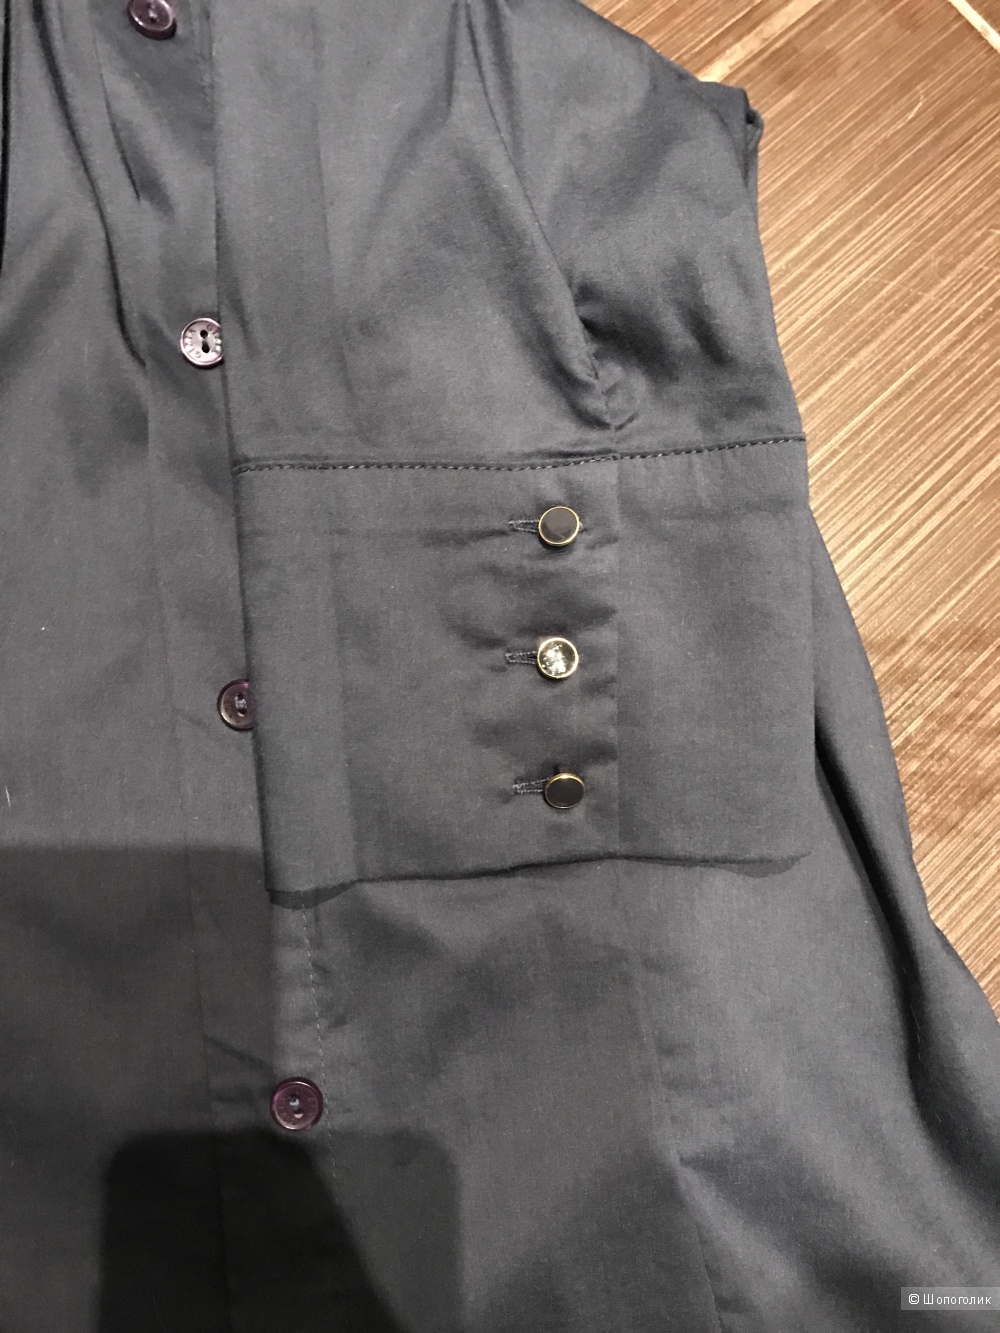 Темно-синяя рубашка Gizia размер 36 со стразами Swarovski одета 1 раз Оригинал